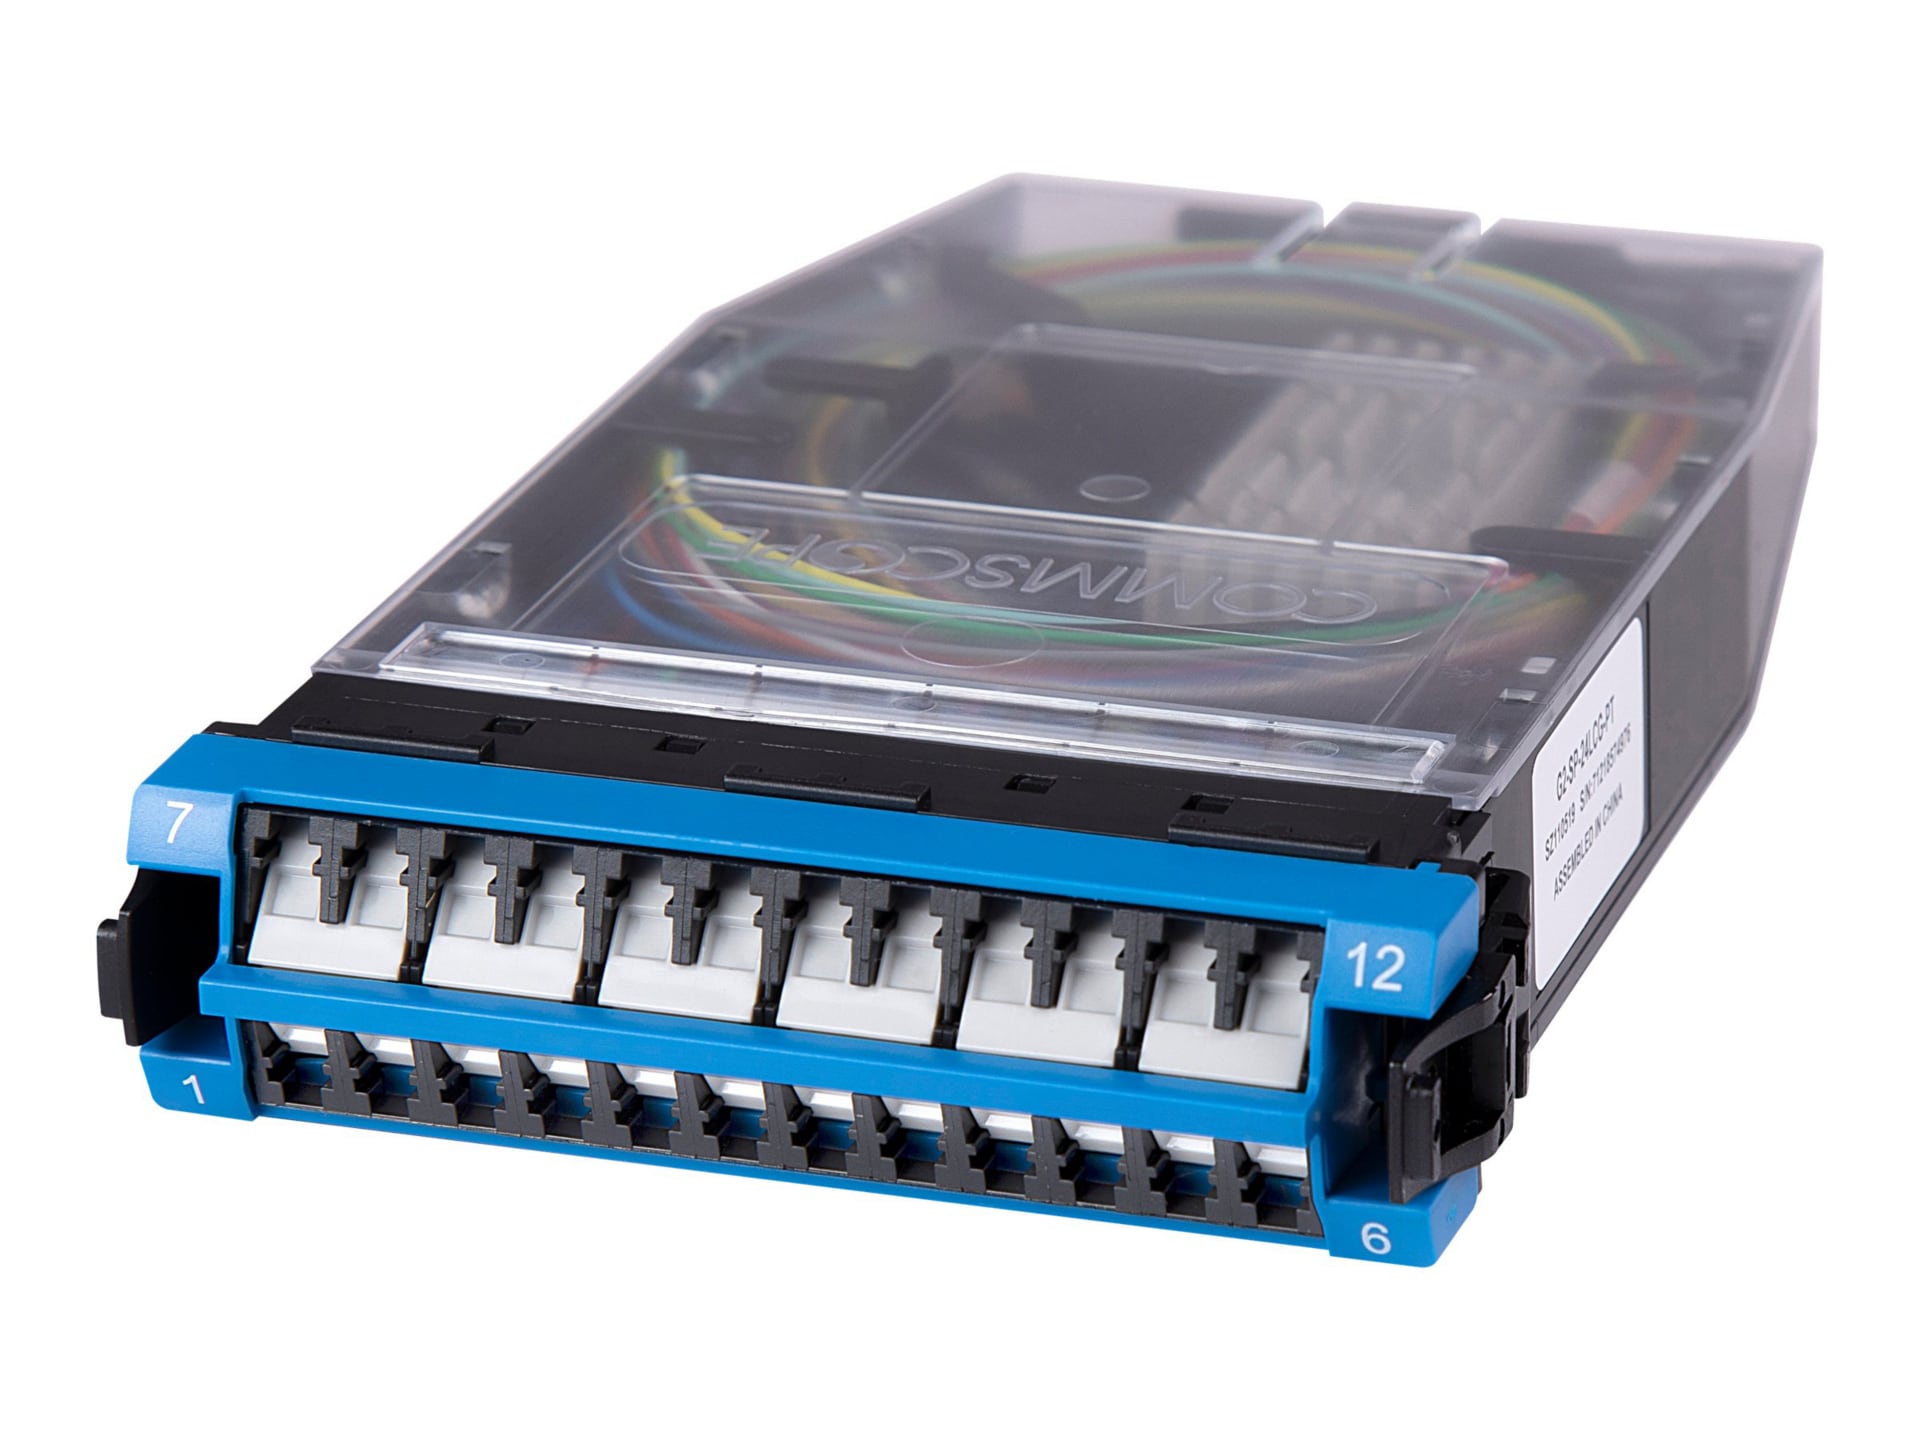 CommScope G2 fiber-optic cassette with pigtails